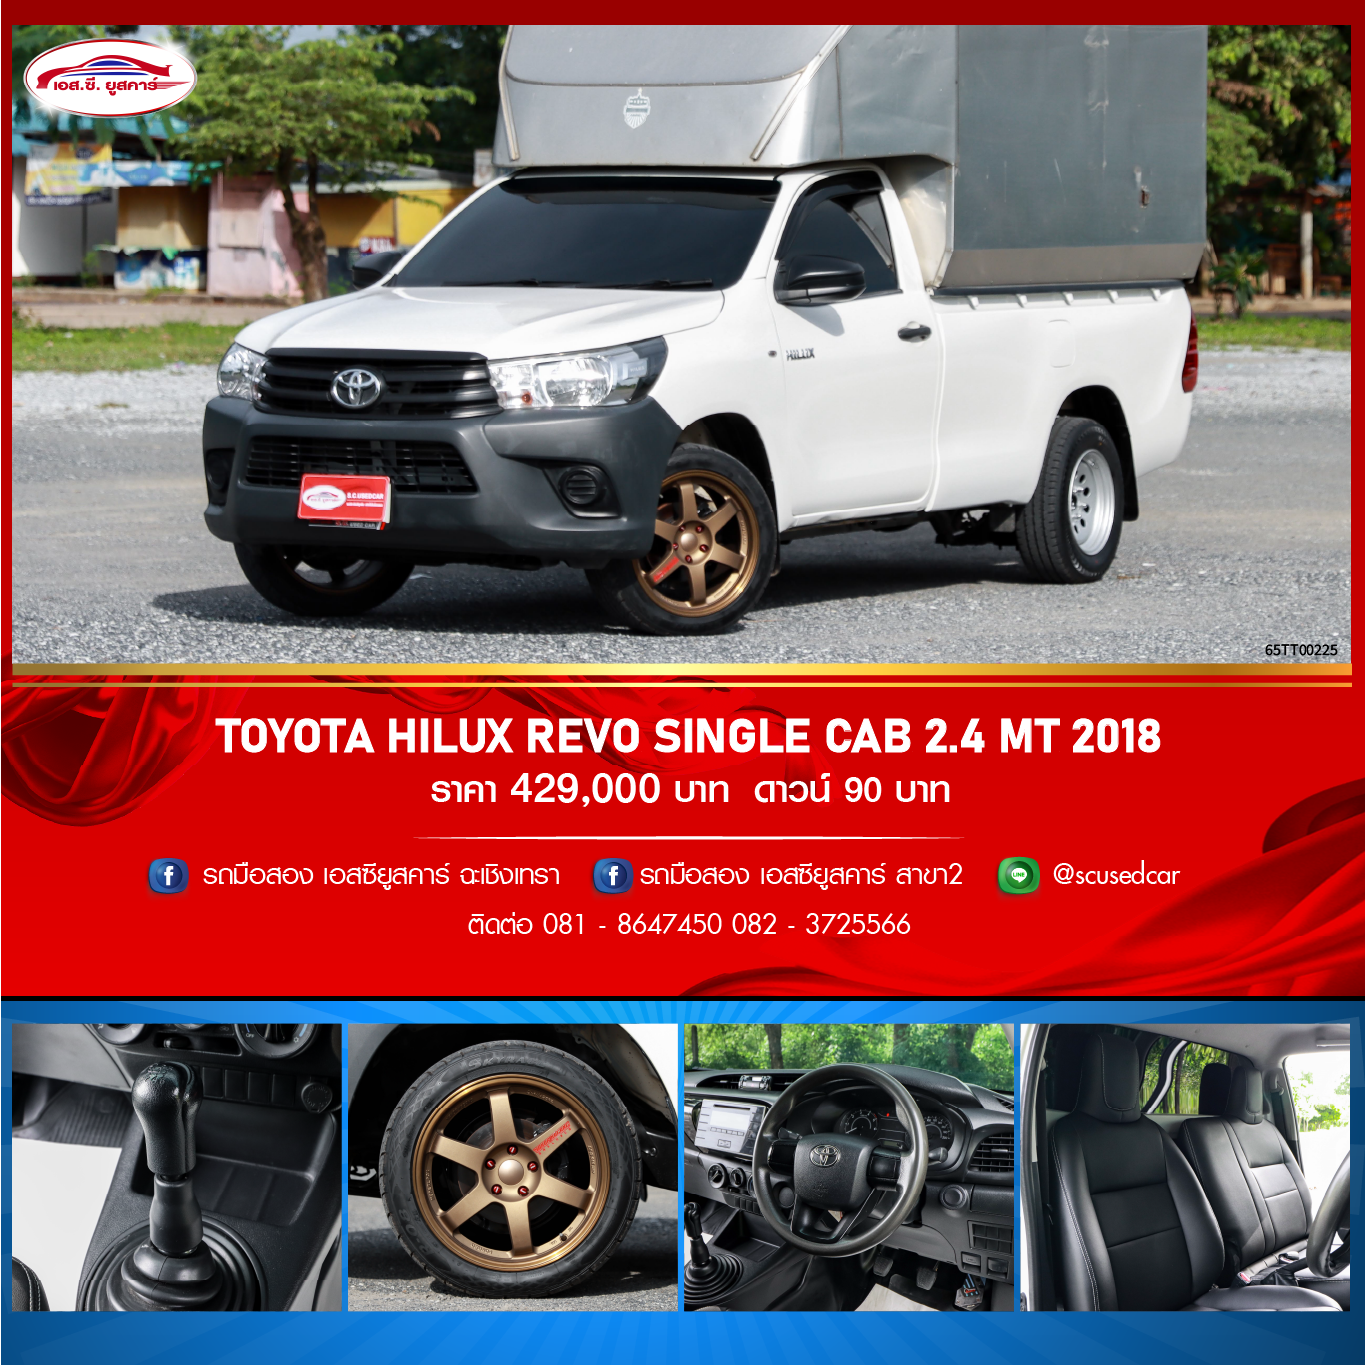 TOYOTA HILUX REVO SINGLE CAB 2.4 MT 2018